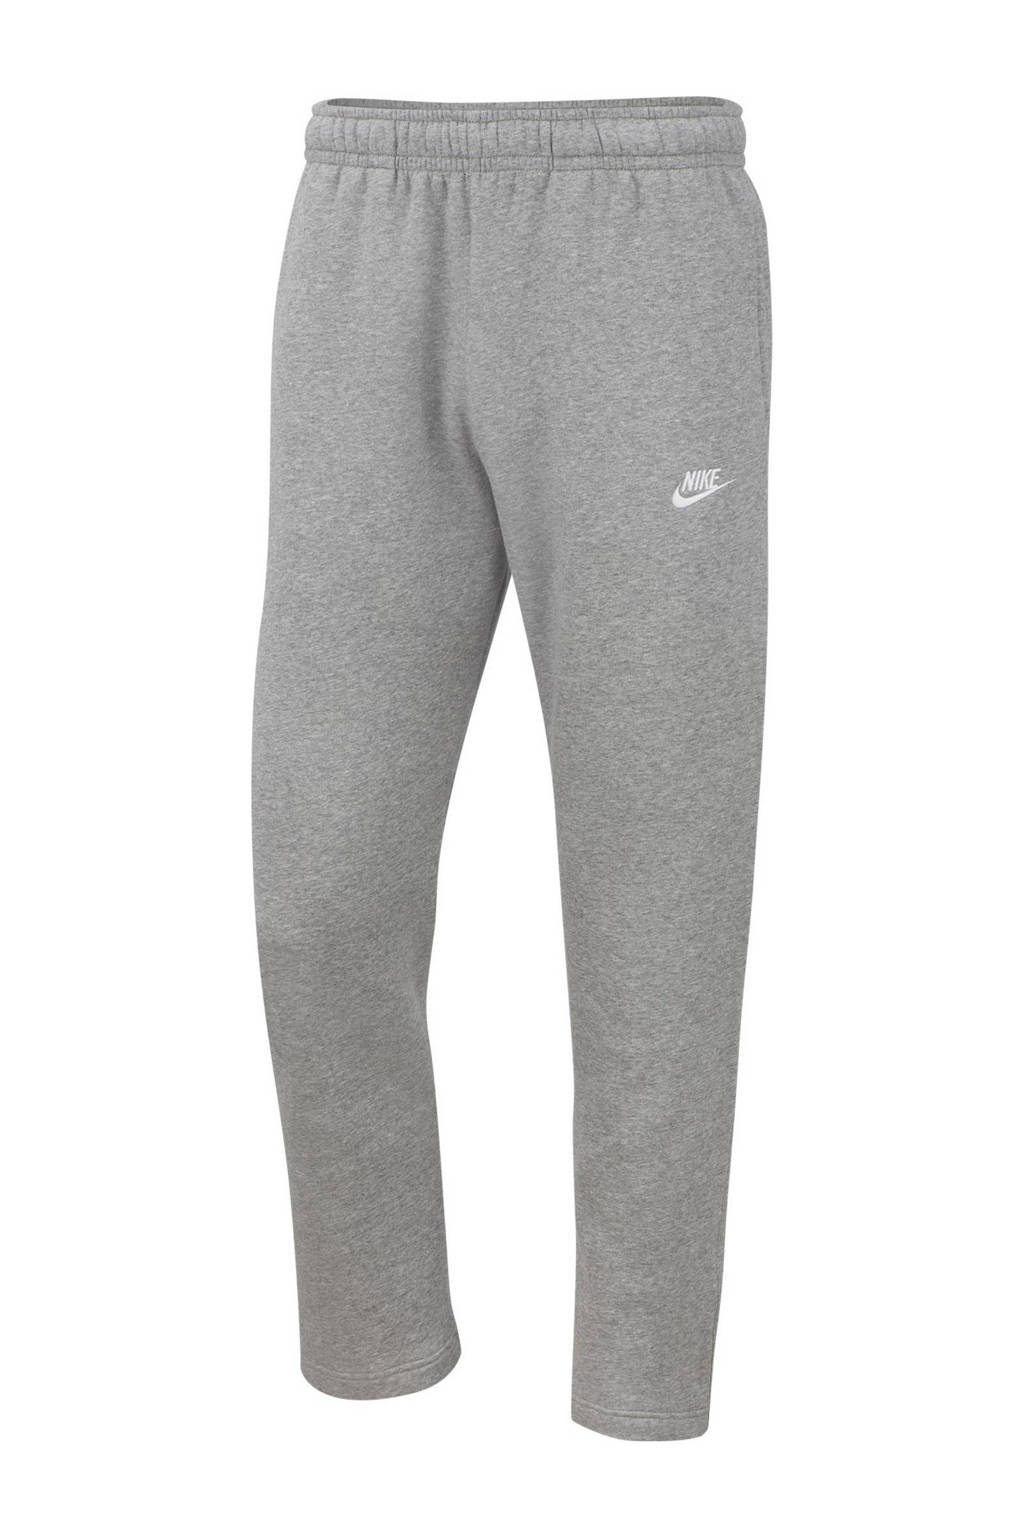 Nike slim fit joggingbroek grijs melange, Grijs melange